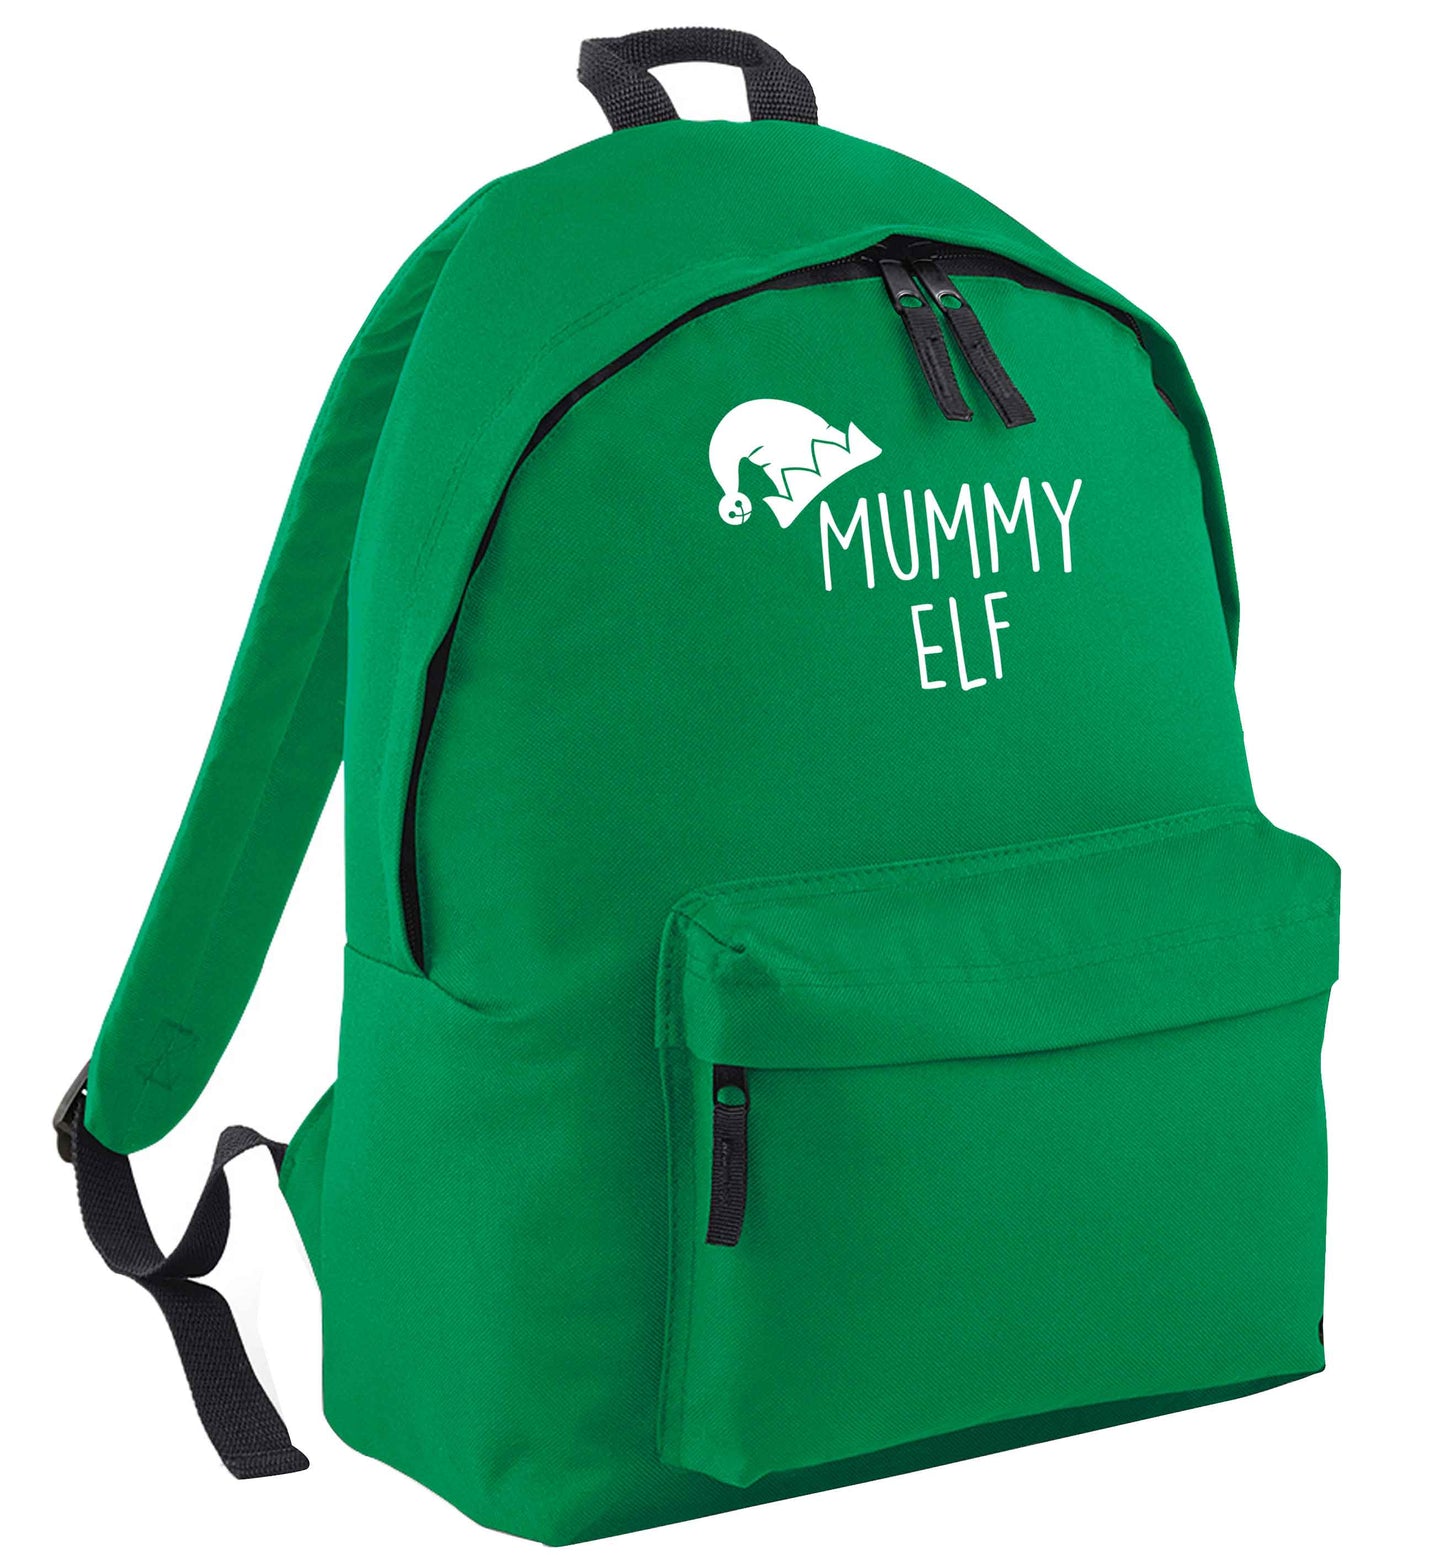 Mummy elf green adults backpack